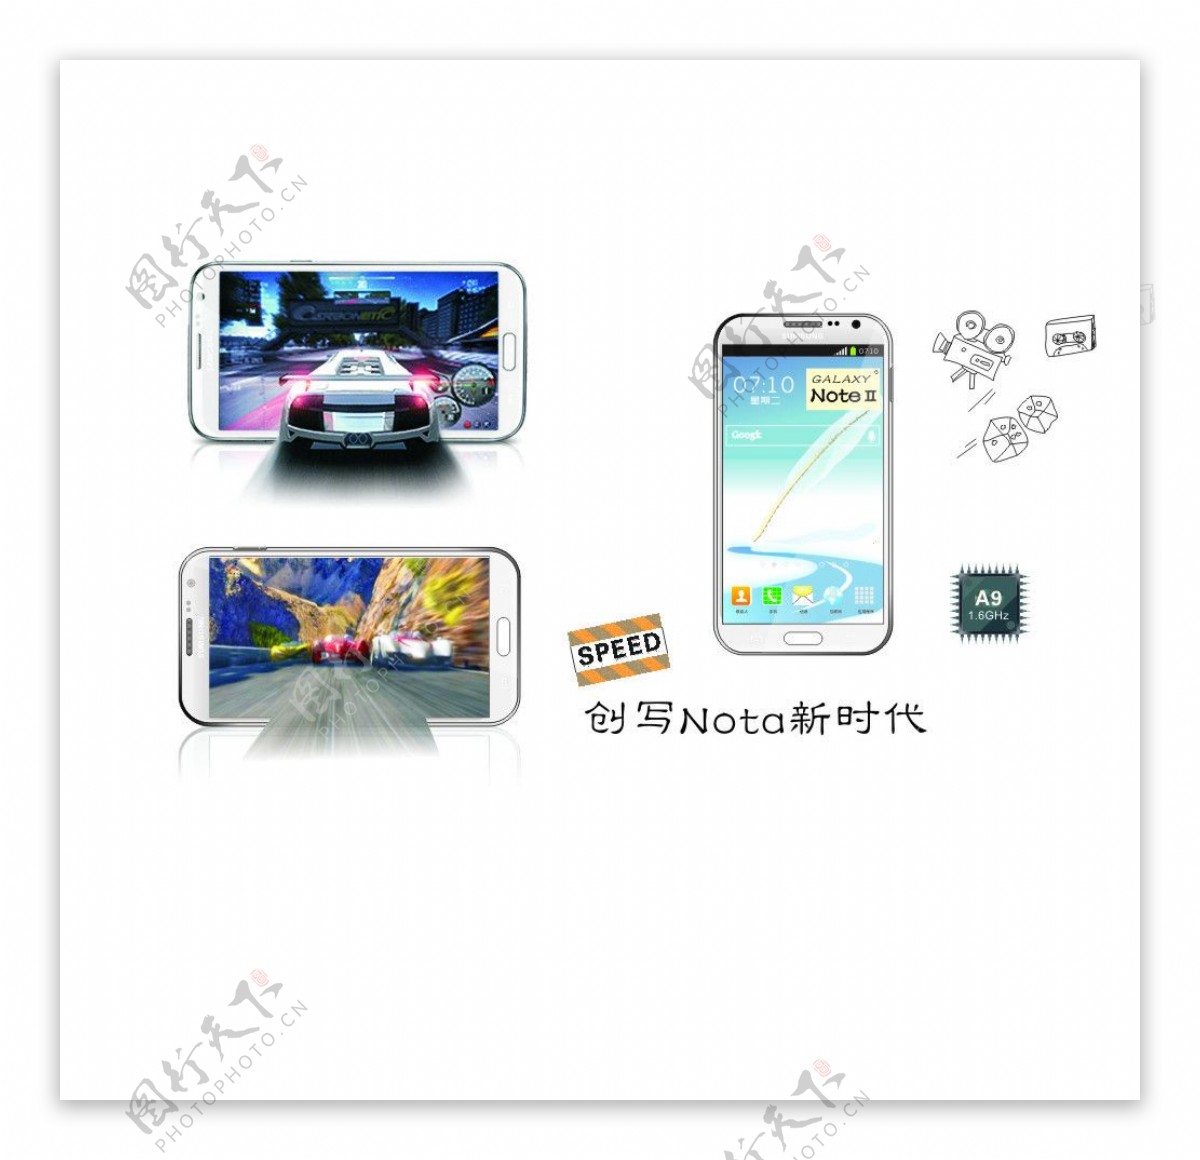 Samsung Galaxy Note II GT-N7100 - notebookcheck-ru.com Библиотека